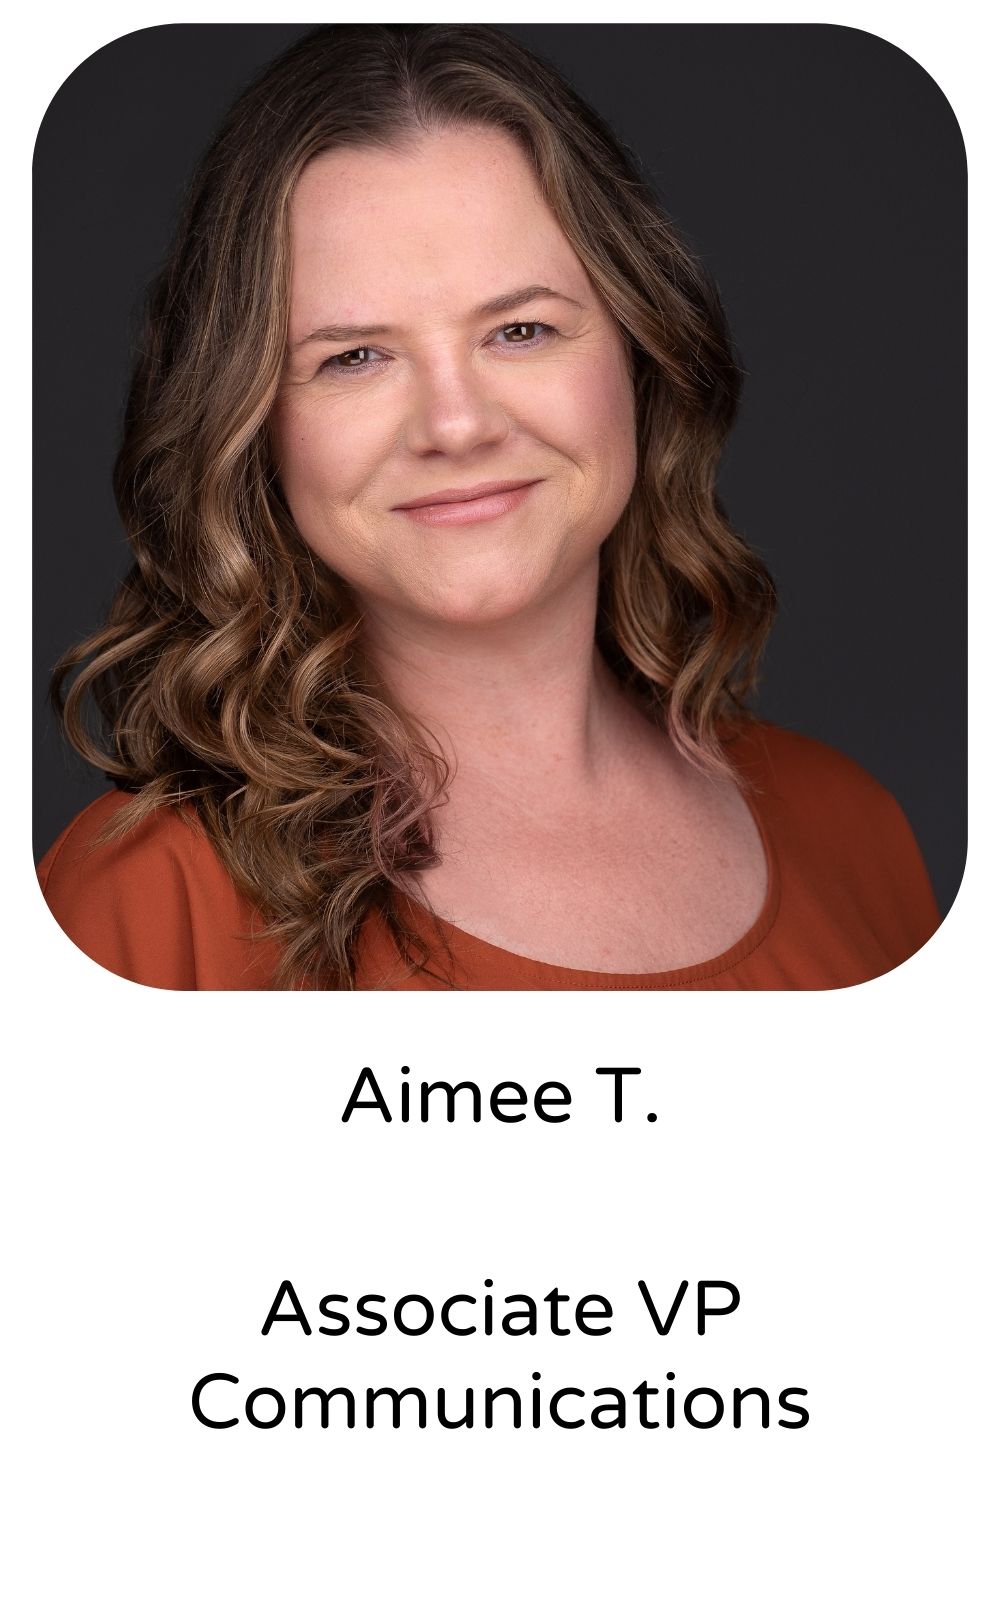 Aimee T, Associate VP, Communications